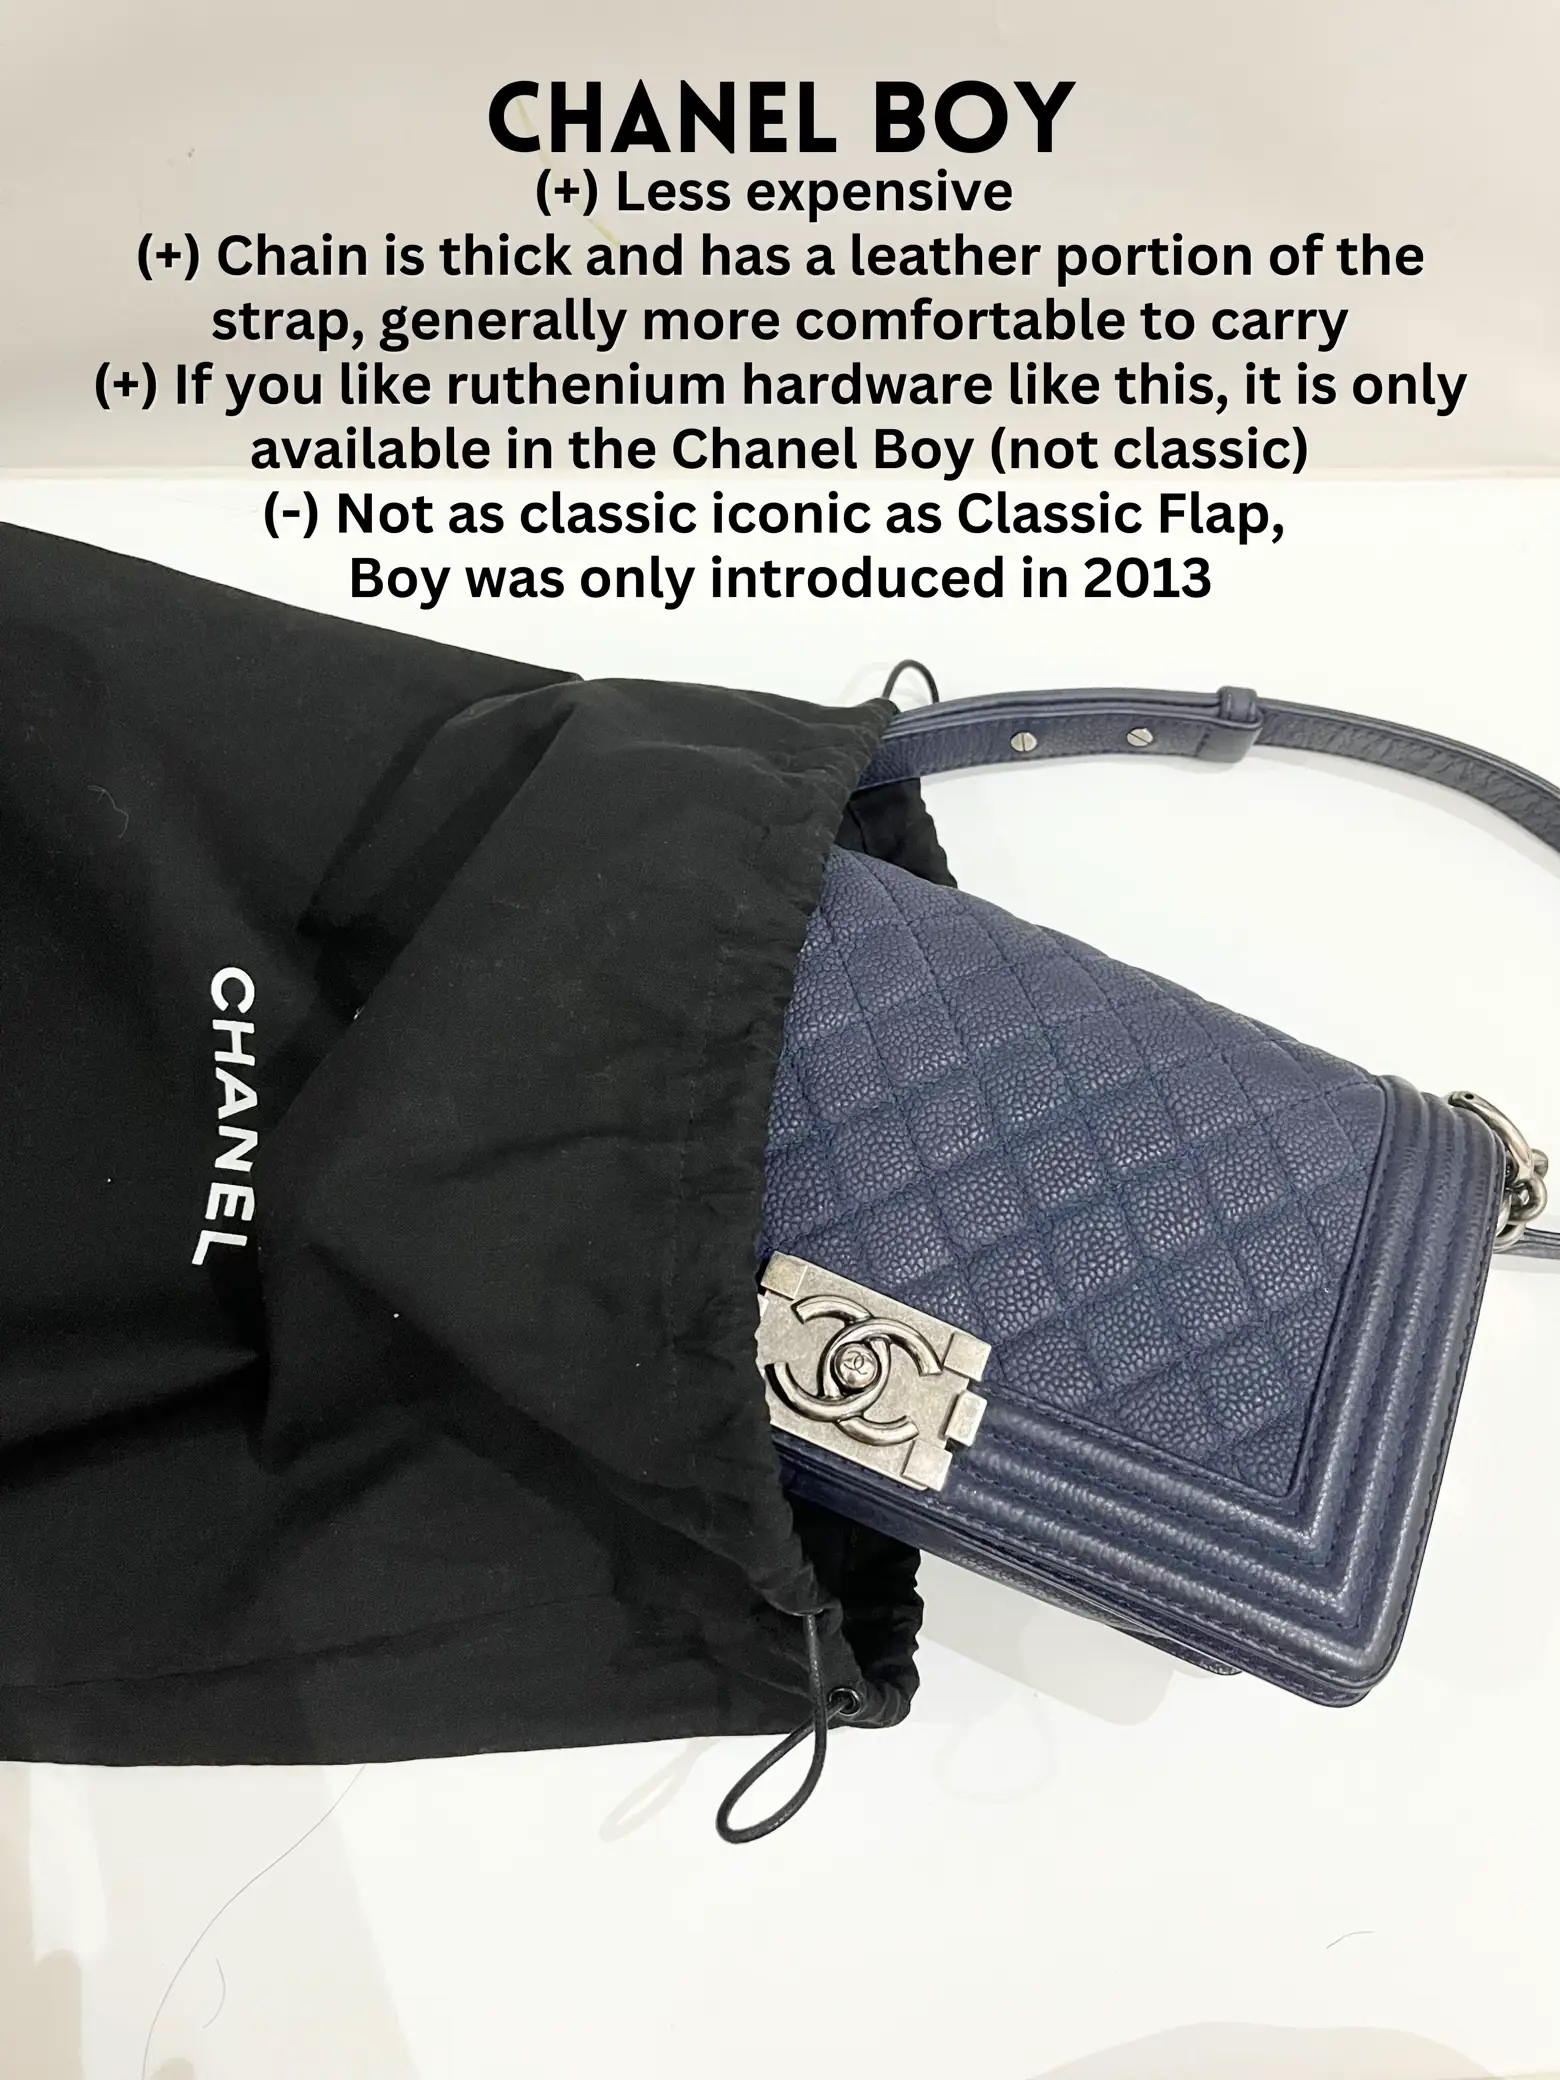 Bag Battles: The Chanel Classic Flap Bag vs. The Chanel Boy Bag